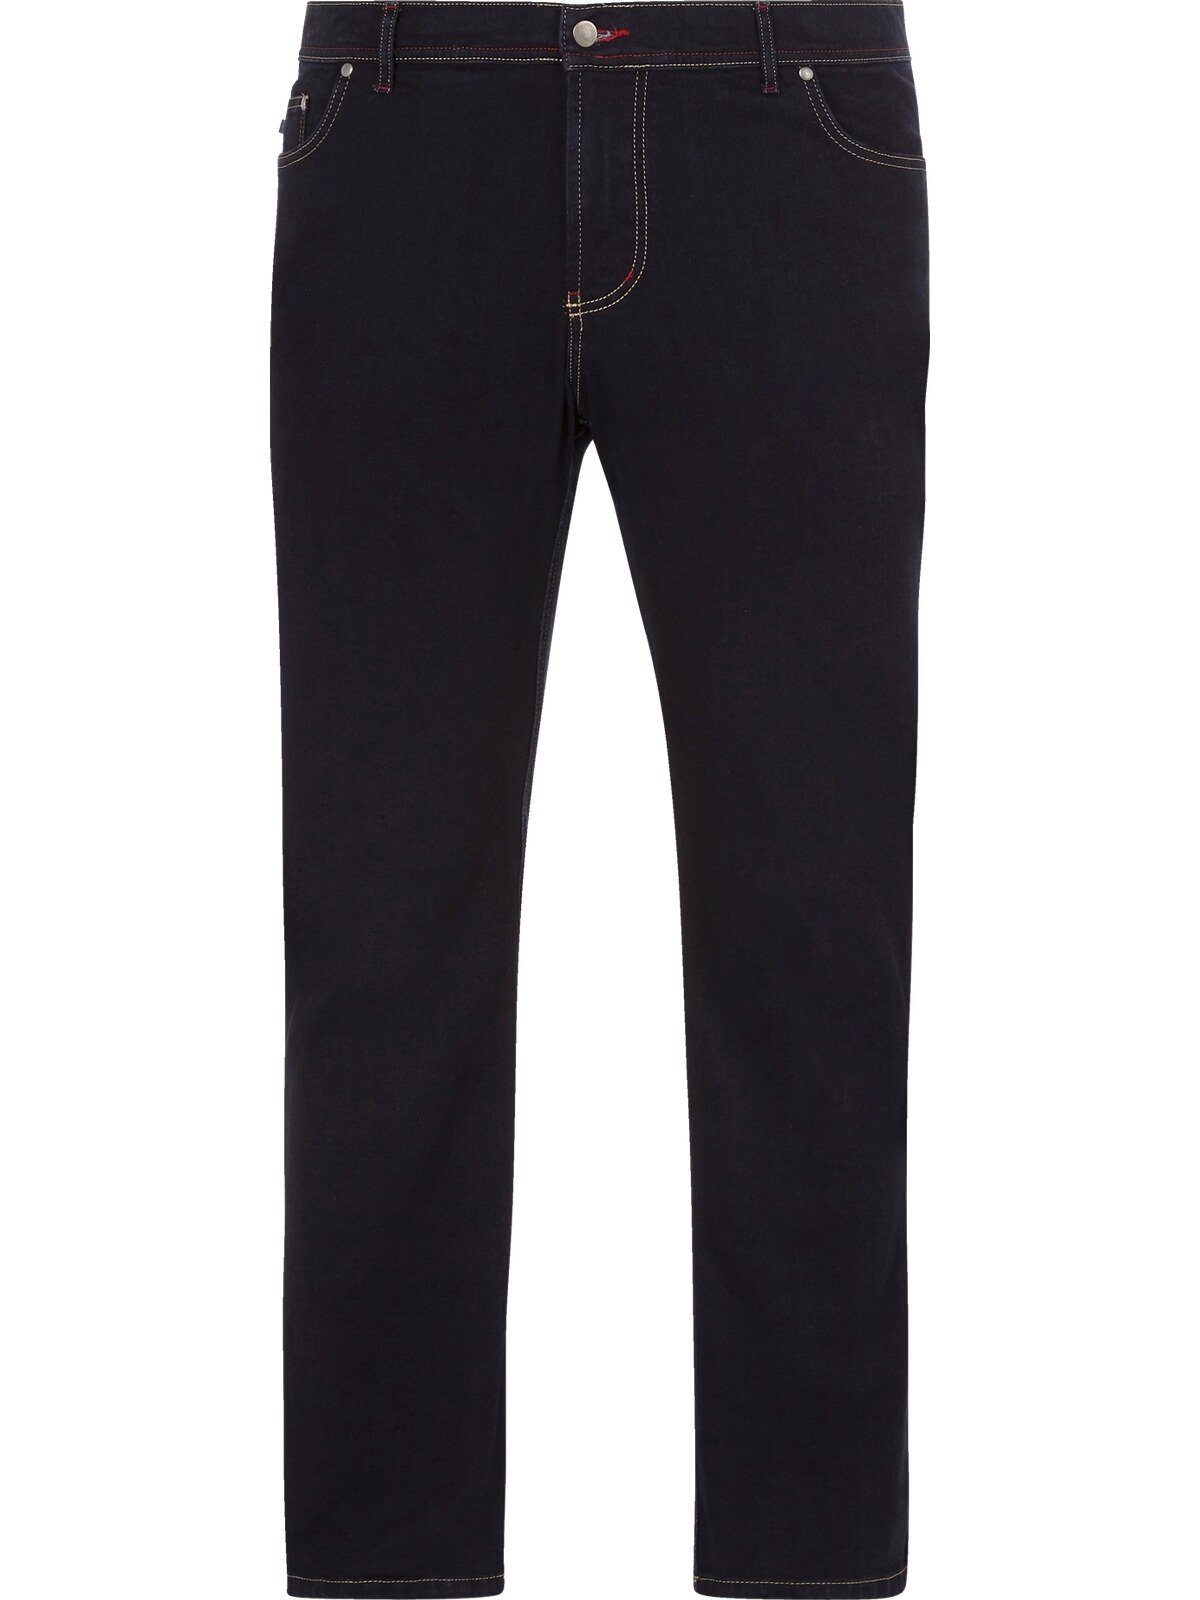 TALYN Colby Tiefbundhose Comfort-fit-Jeans +Fit BARON Charles Kollektion,